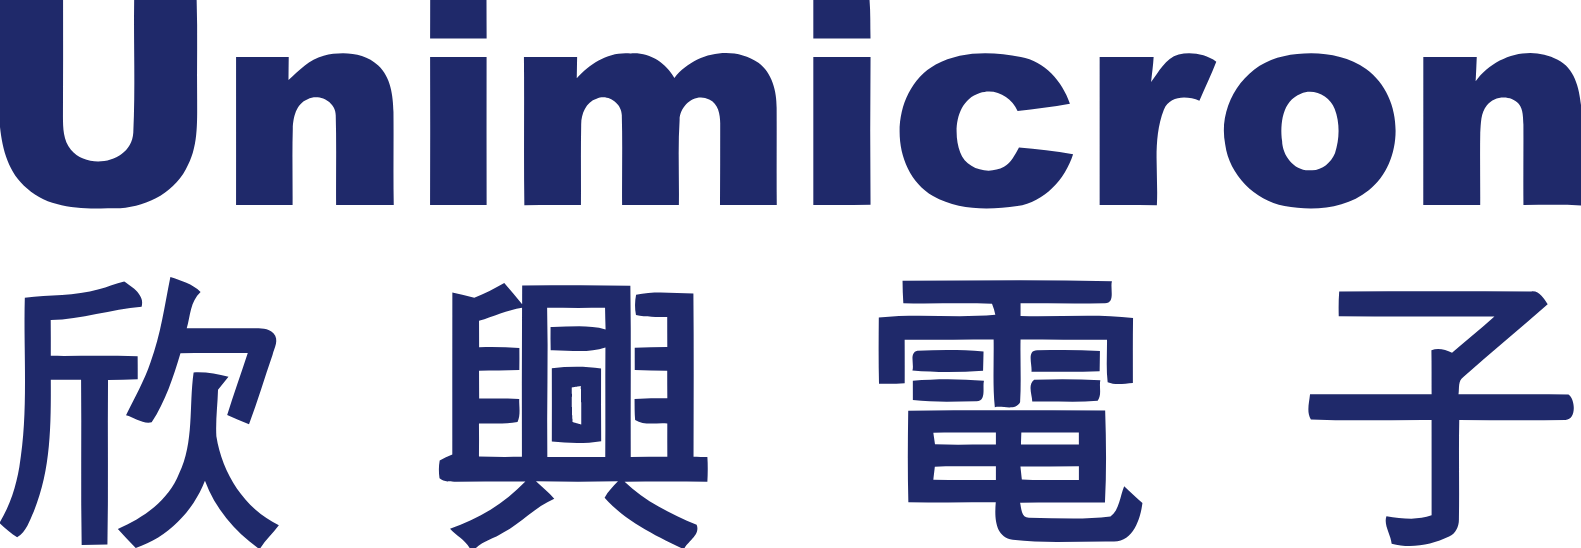 Unimicron logo large (transparent PNG)